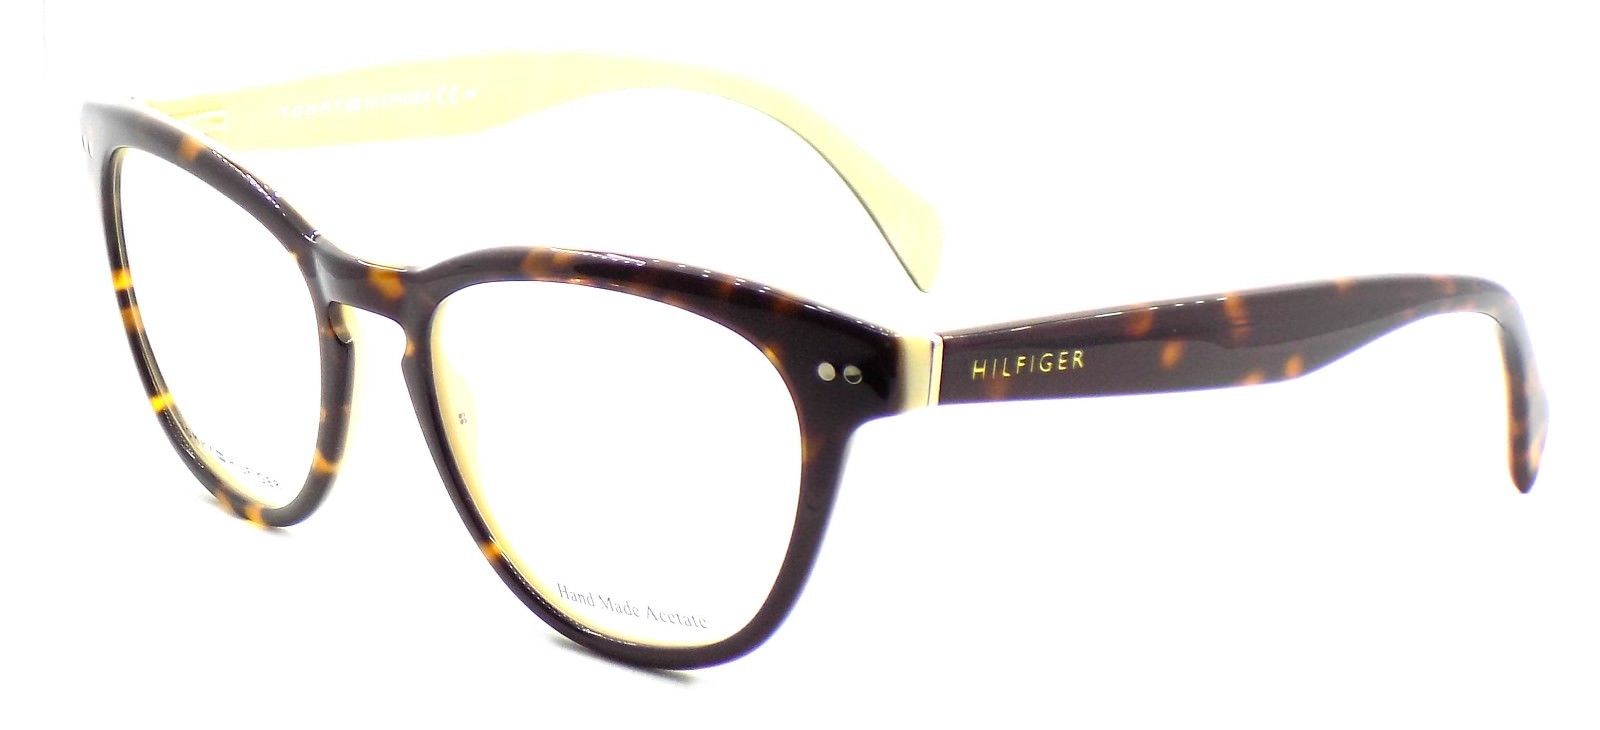 1-TOMMY HILFIGER TH 1201 60A Eyeglasses Frames 52-18-145 Havana Cream + CASE-762753052452-IKSpecs